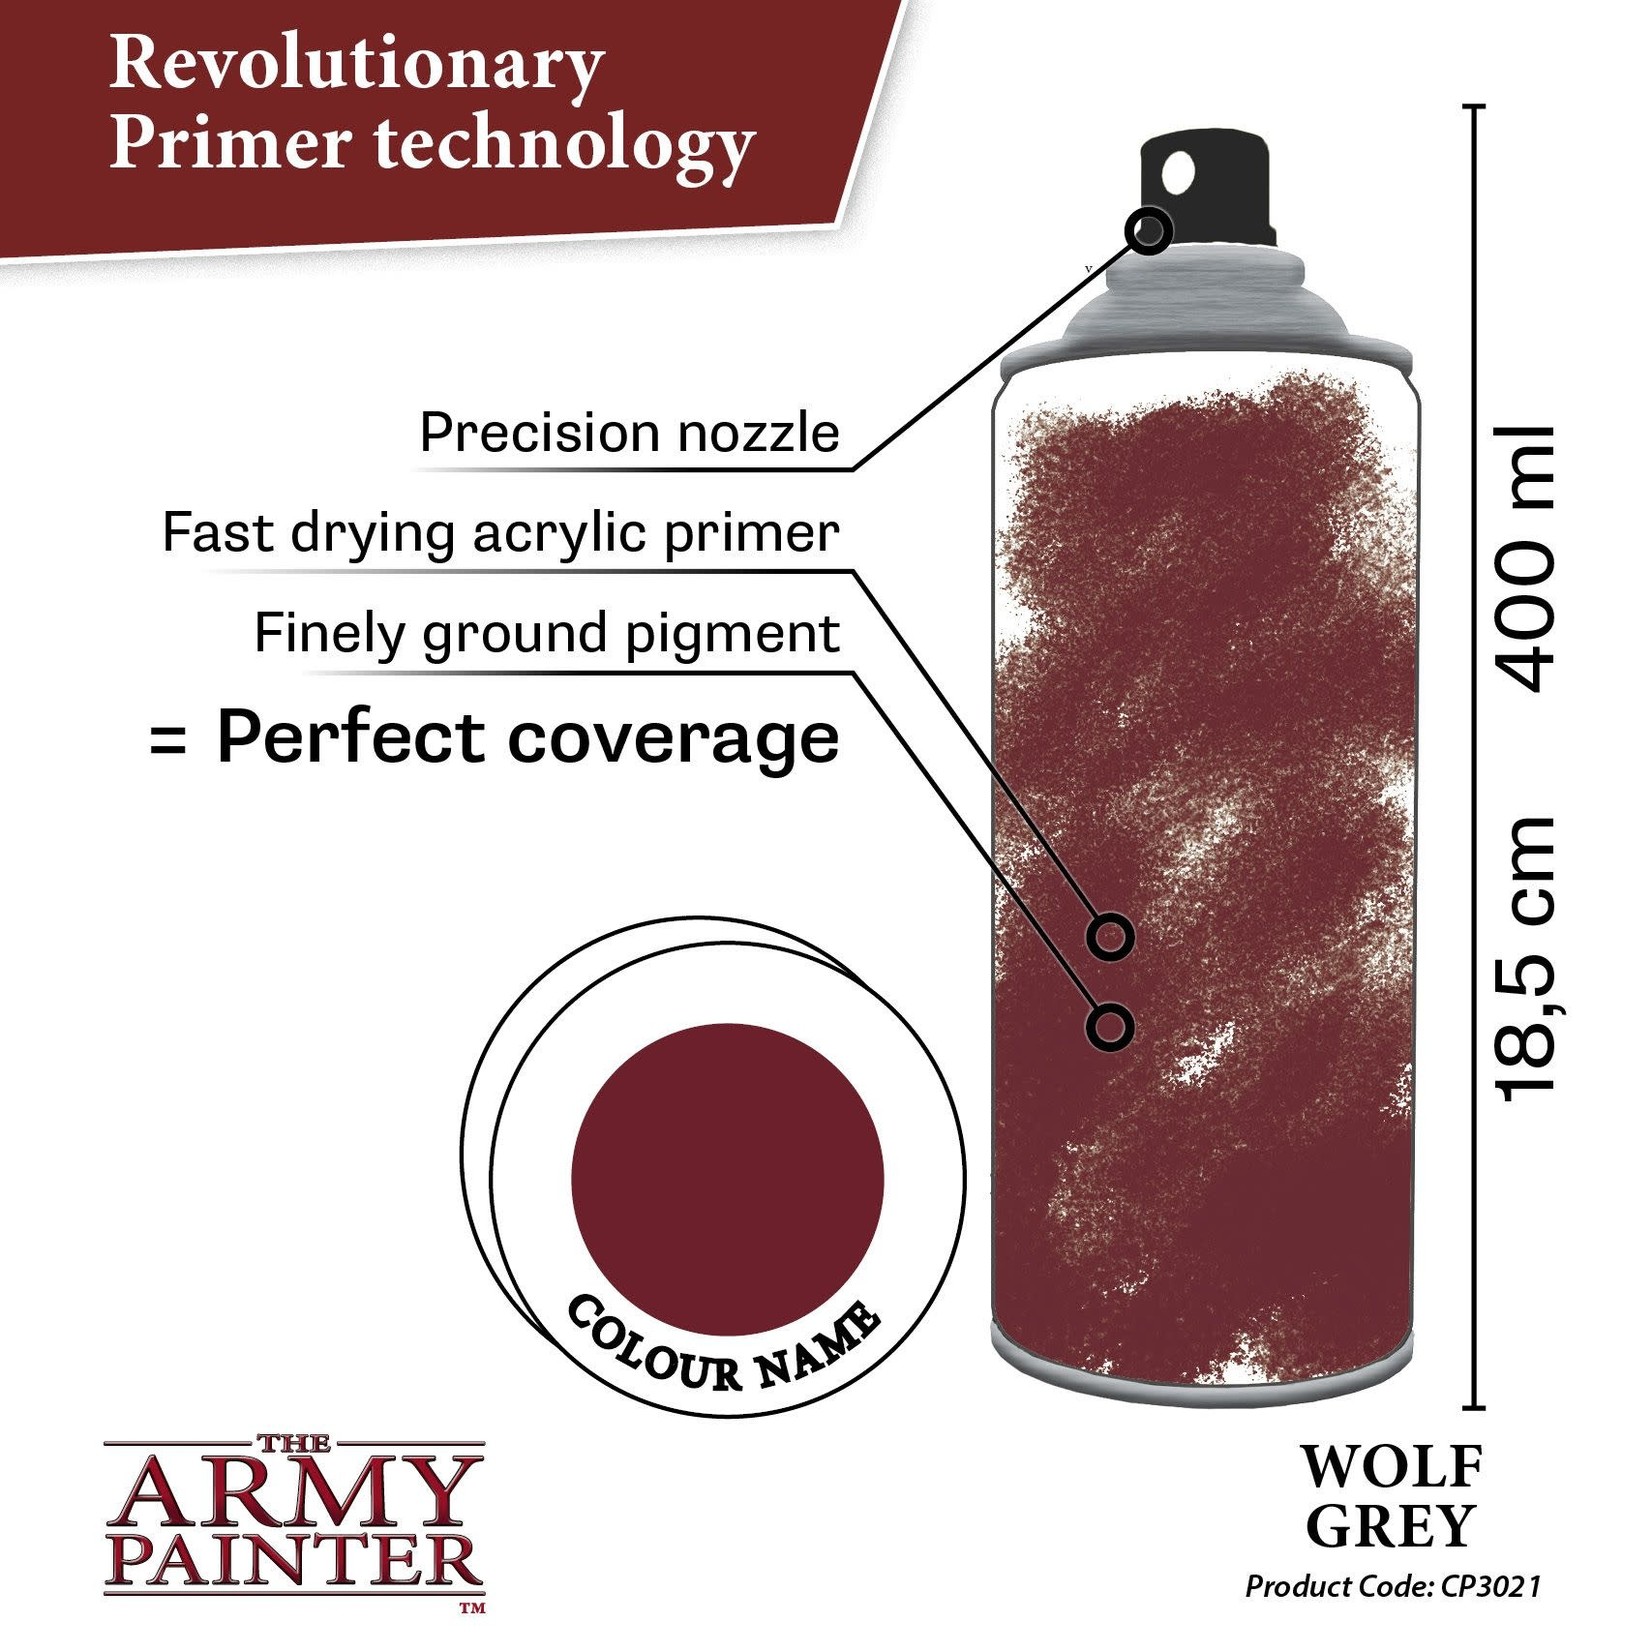 Army Painter Army Painter Spray Primer  Wolf Grey